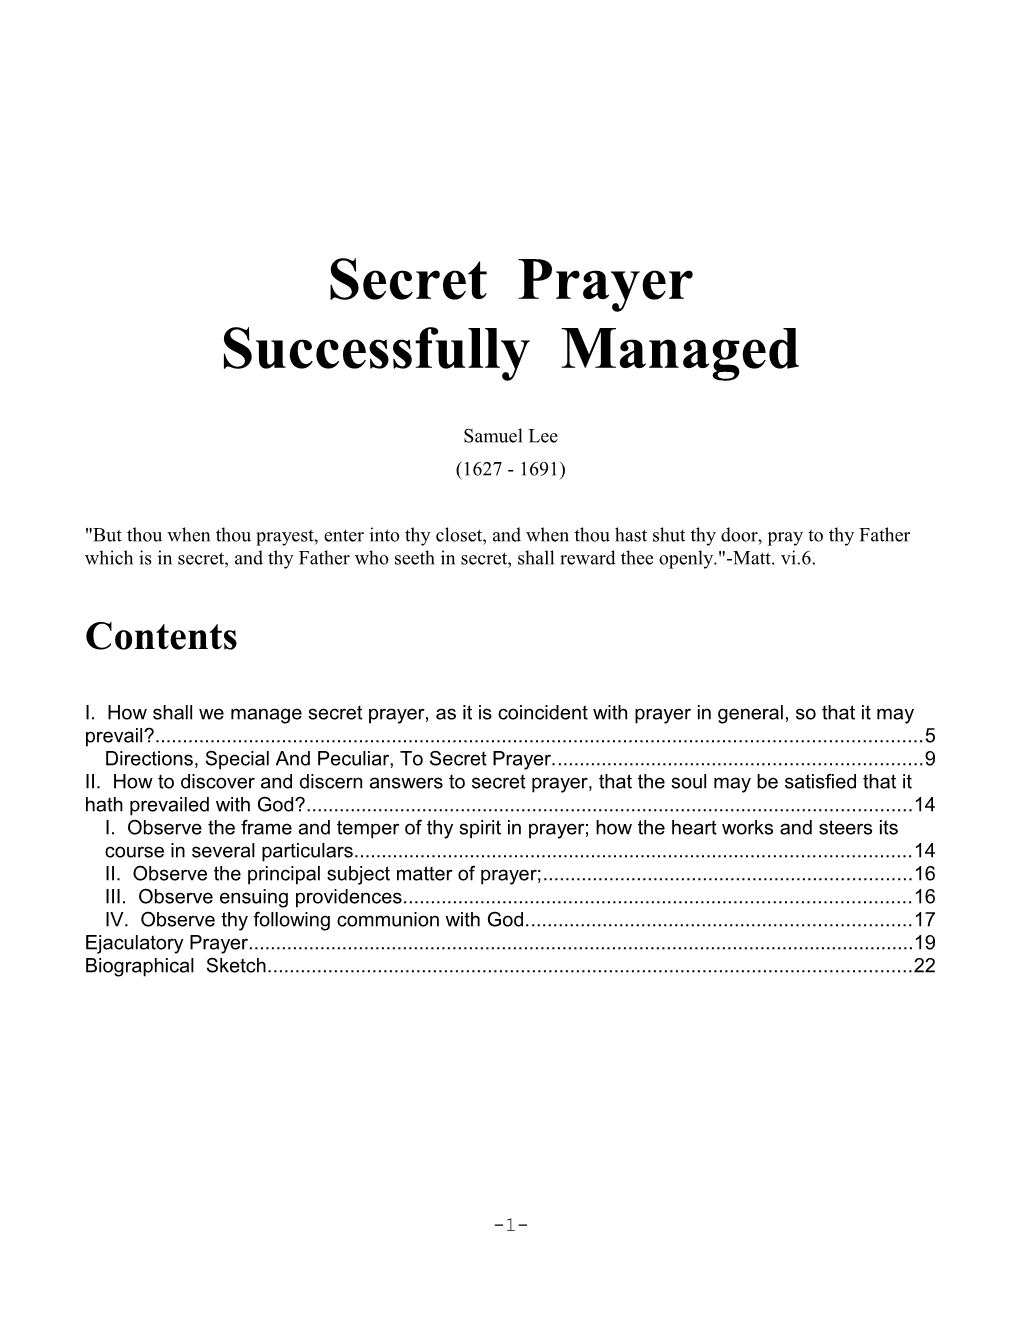 Secret Prayer Successfully Managed